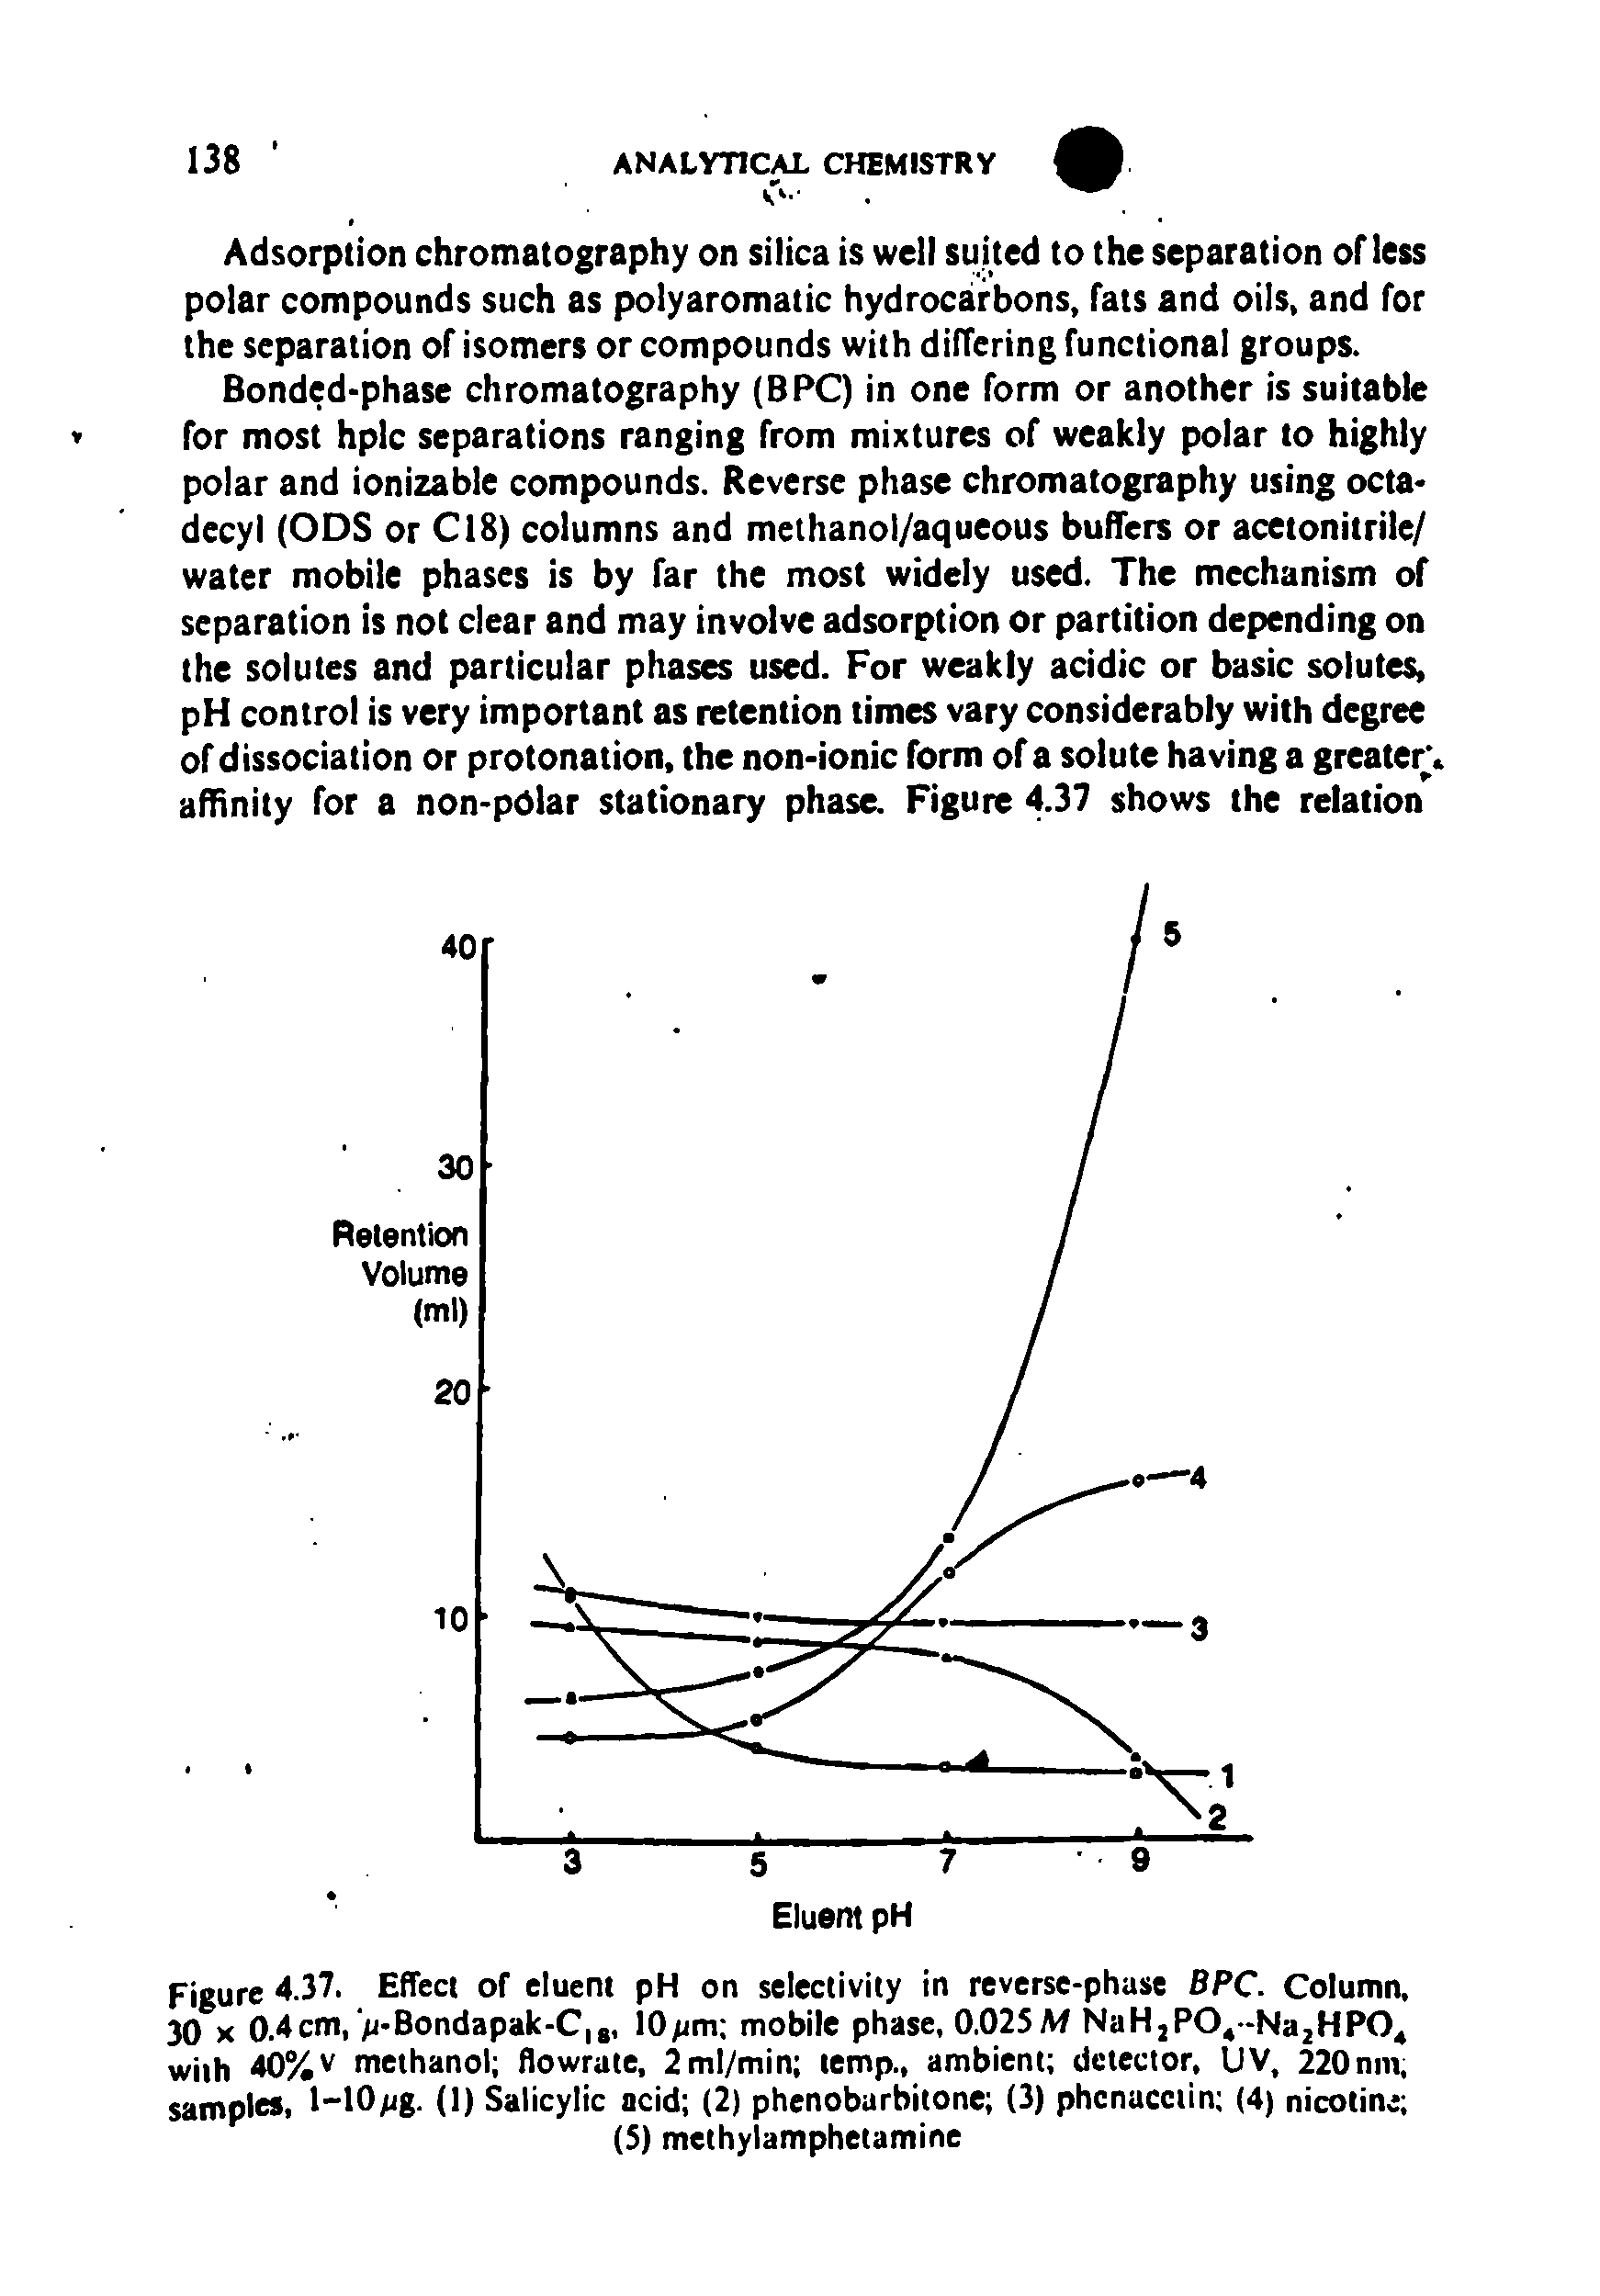 Figure 4.37. Effect of eluent pH on selectivity in reverse-phase BPC. Column, 30 x 0.4cm, Bondapak-C, 10/jm mobile phase, 0.025M NaH2P04-Na2HP04 wiih 40%v methanol flowrate, 2ml/min temp., ambient detector, UV, 220nm, samples. 1—lOpg. (1) Salicylic acid (2) phenobarbitone (3) phcnacctin (4) nicotine ...